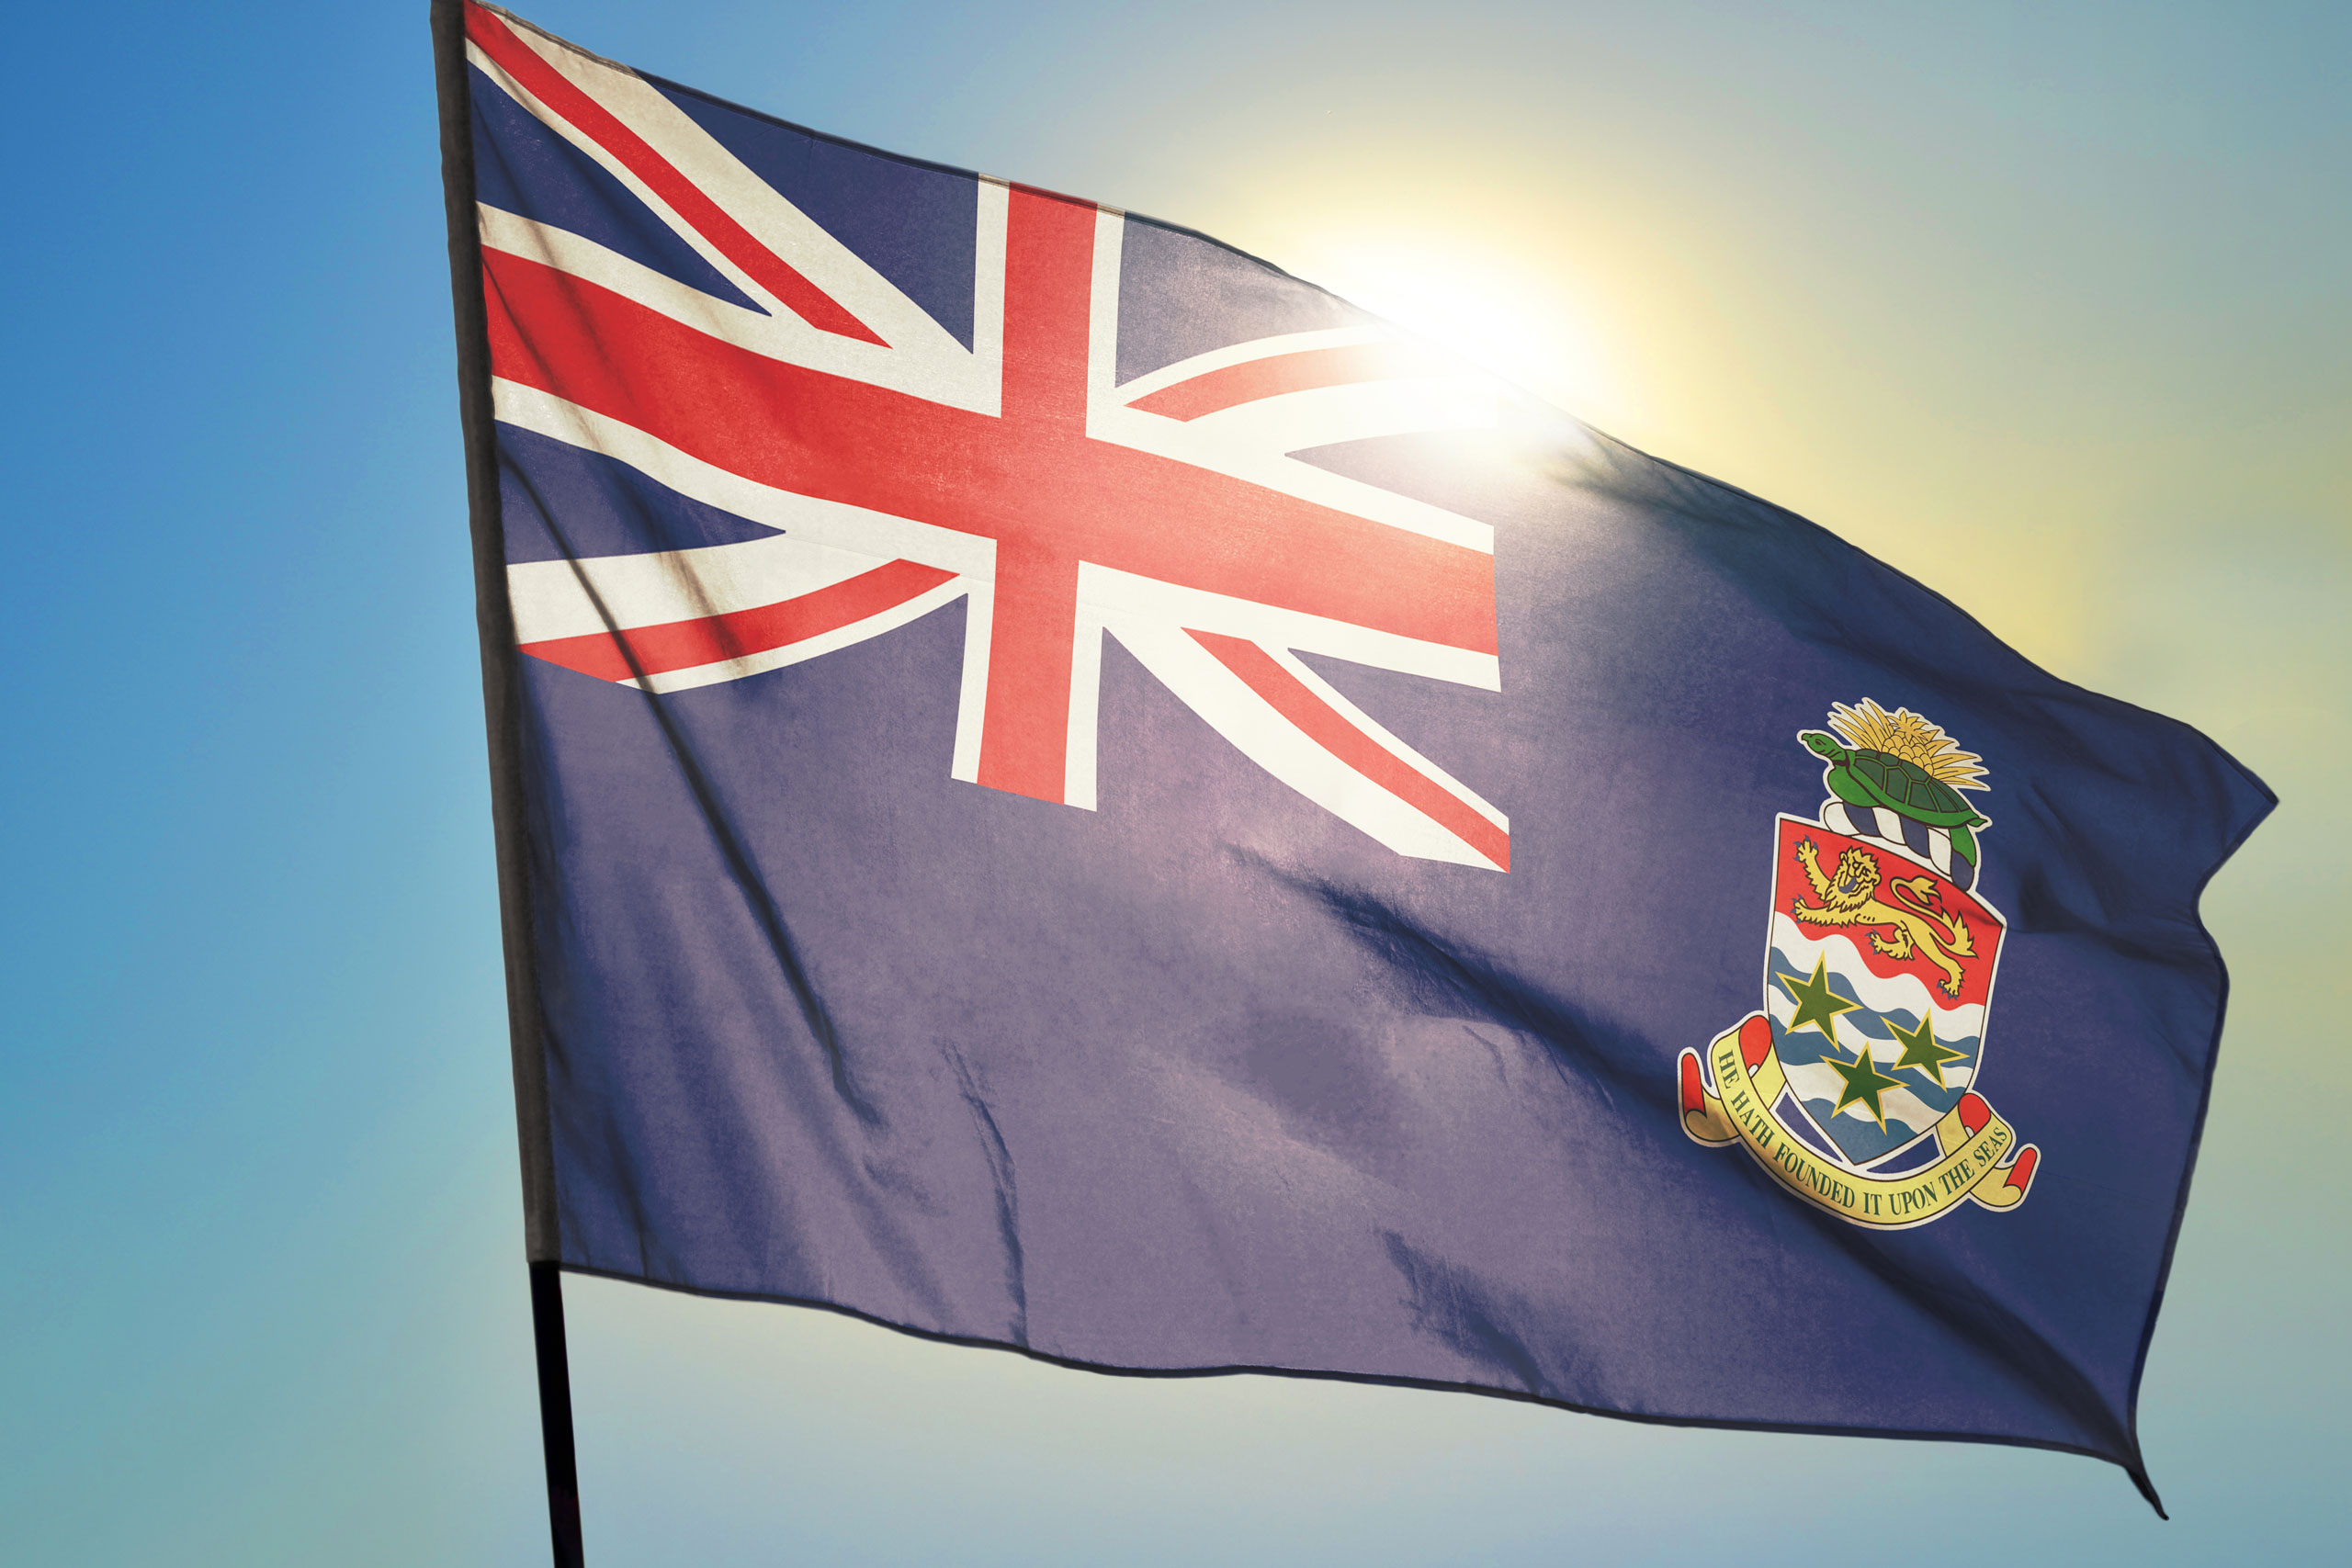 The Cayman Islands national flag